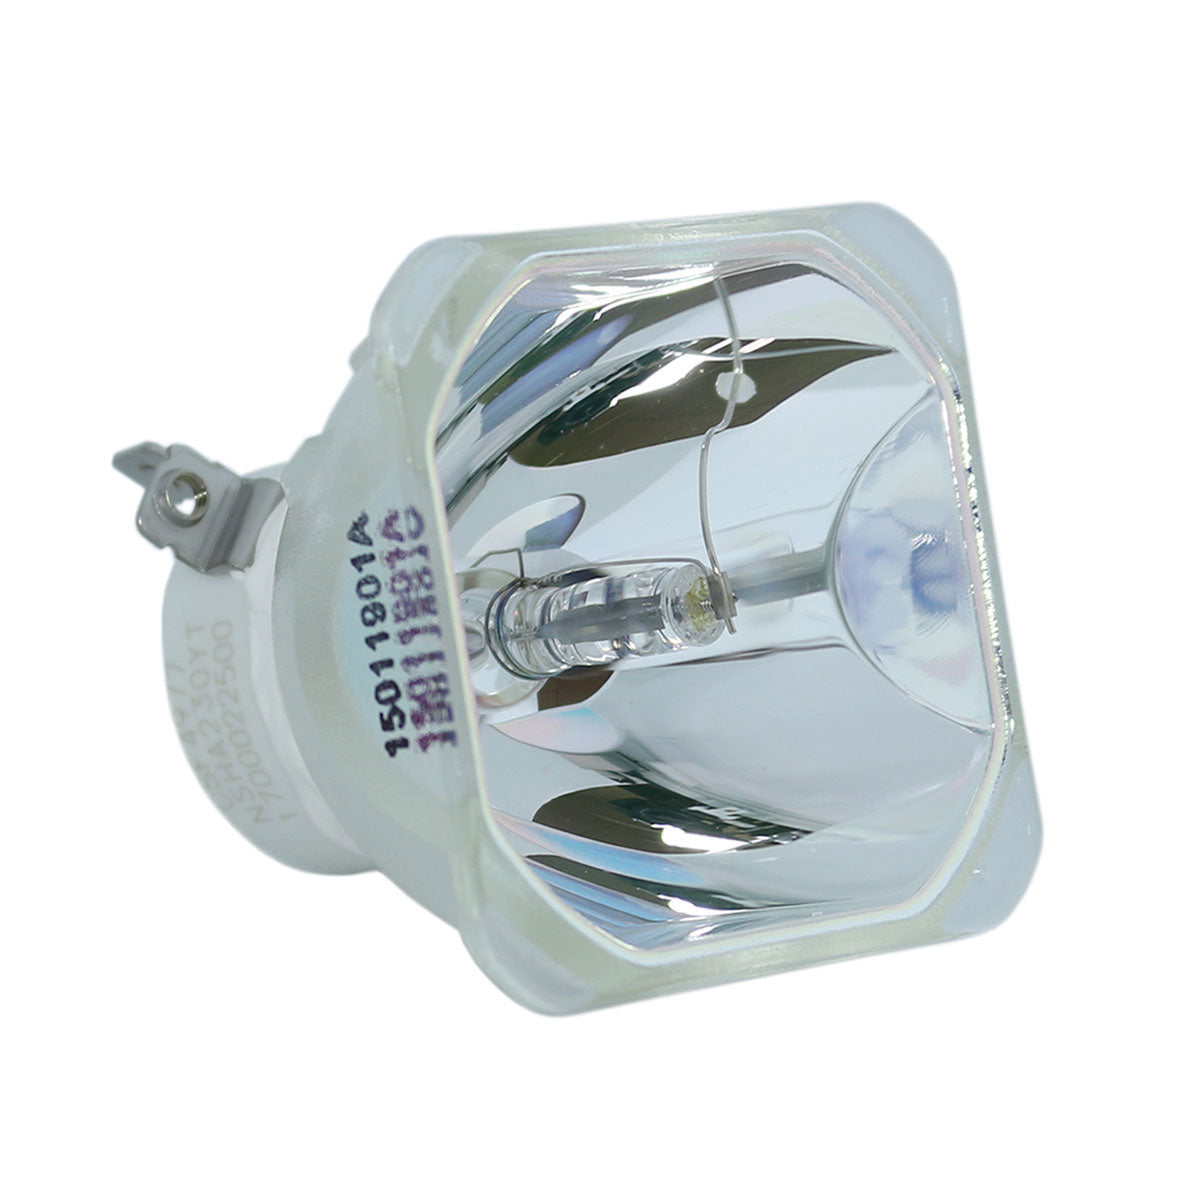 Hitachi DT01431 Ushio Projector Bare Lamp